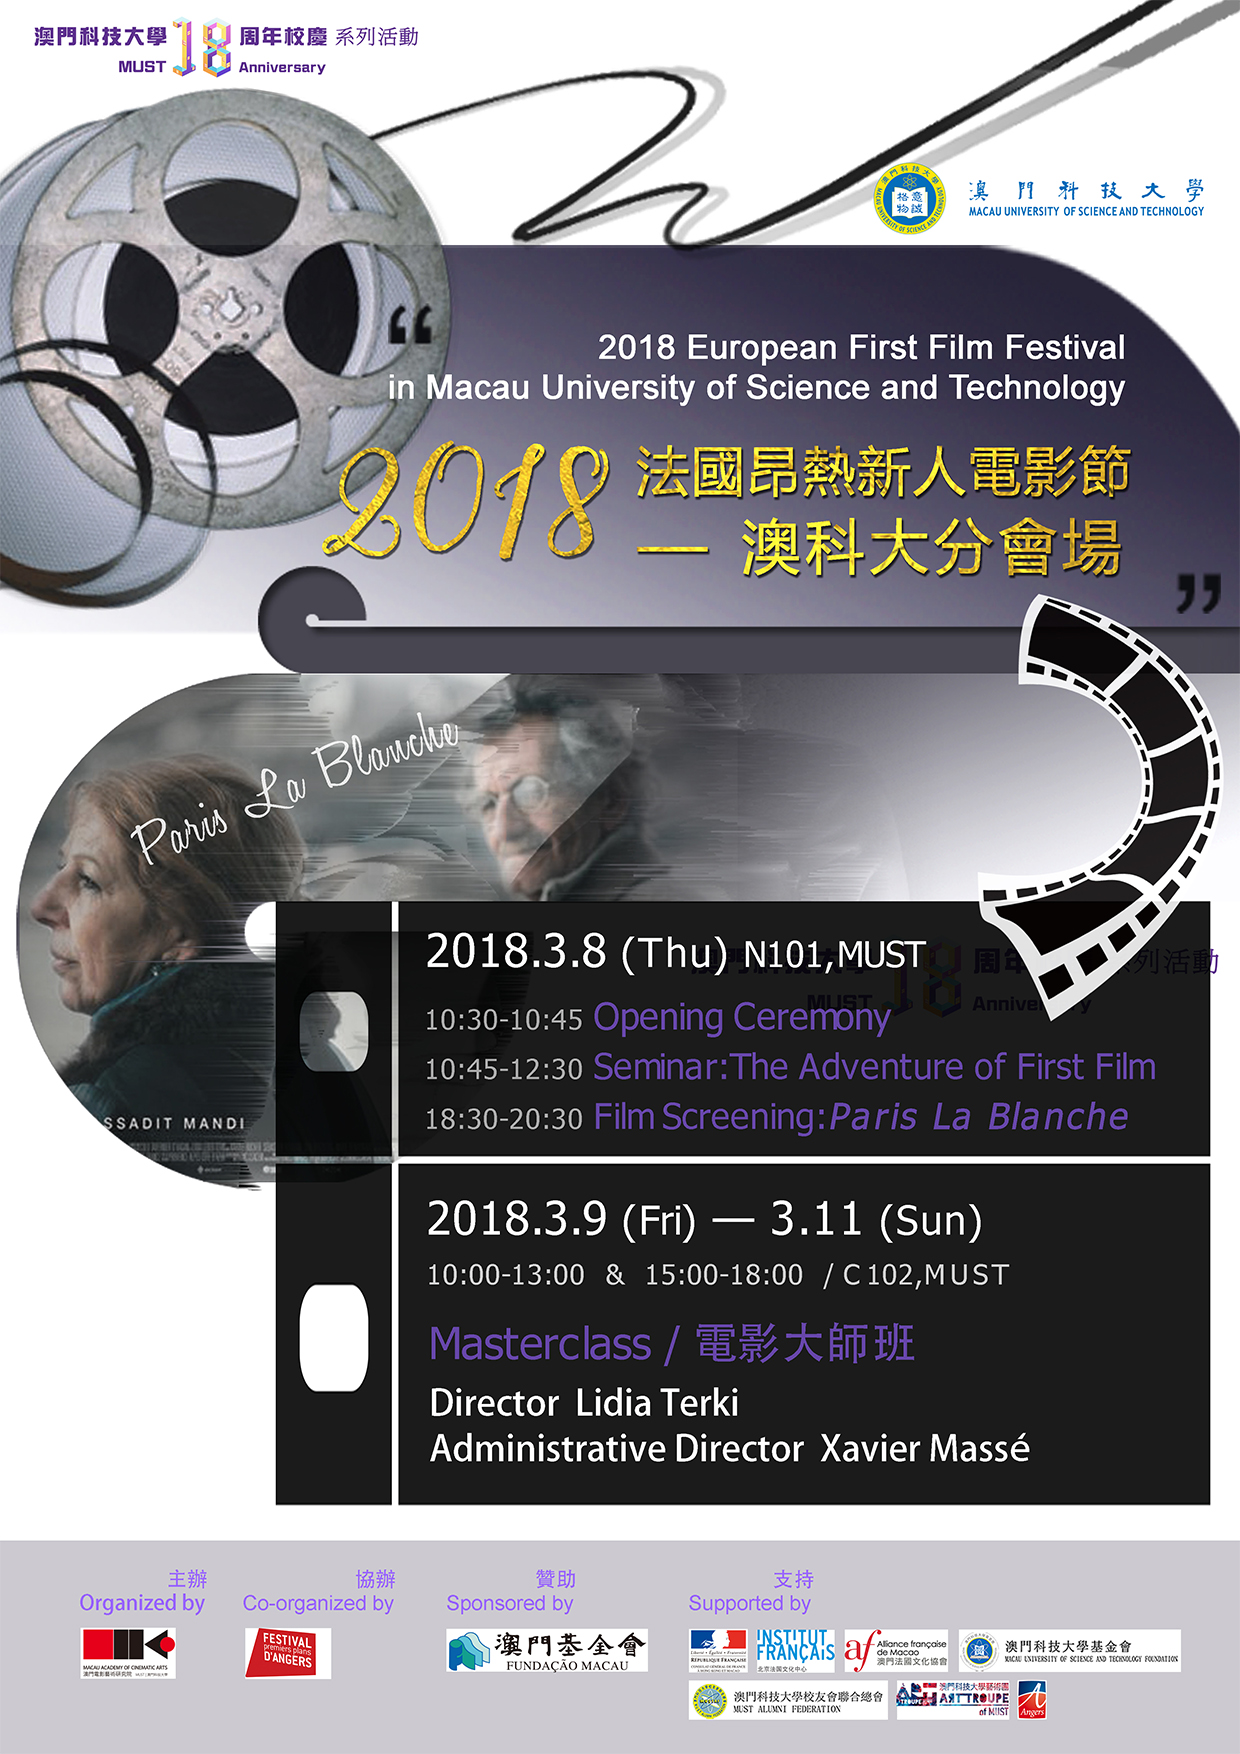 2018European First Film Festival Poster